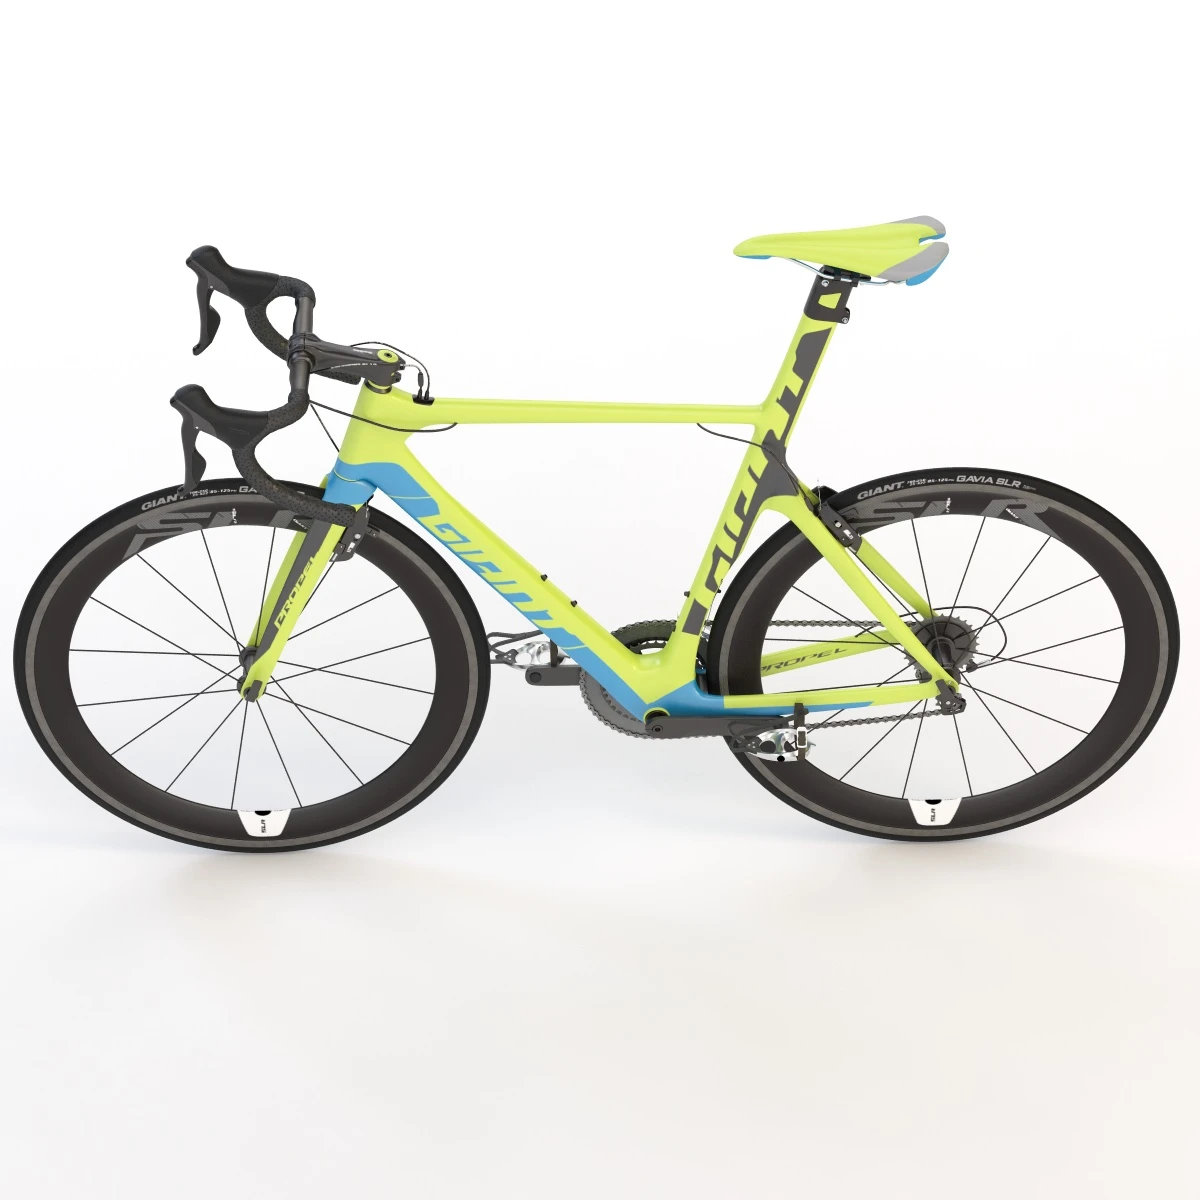 Giant Propel Advanced Sl-2 Green-Blue Lightweight Sprinter Bicycle 3D Model_09